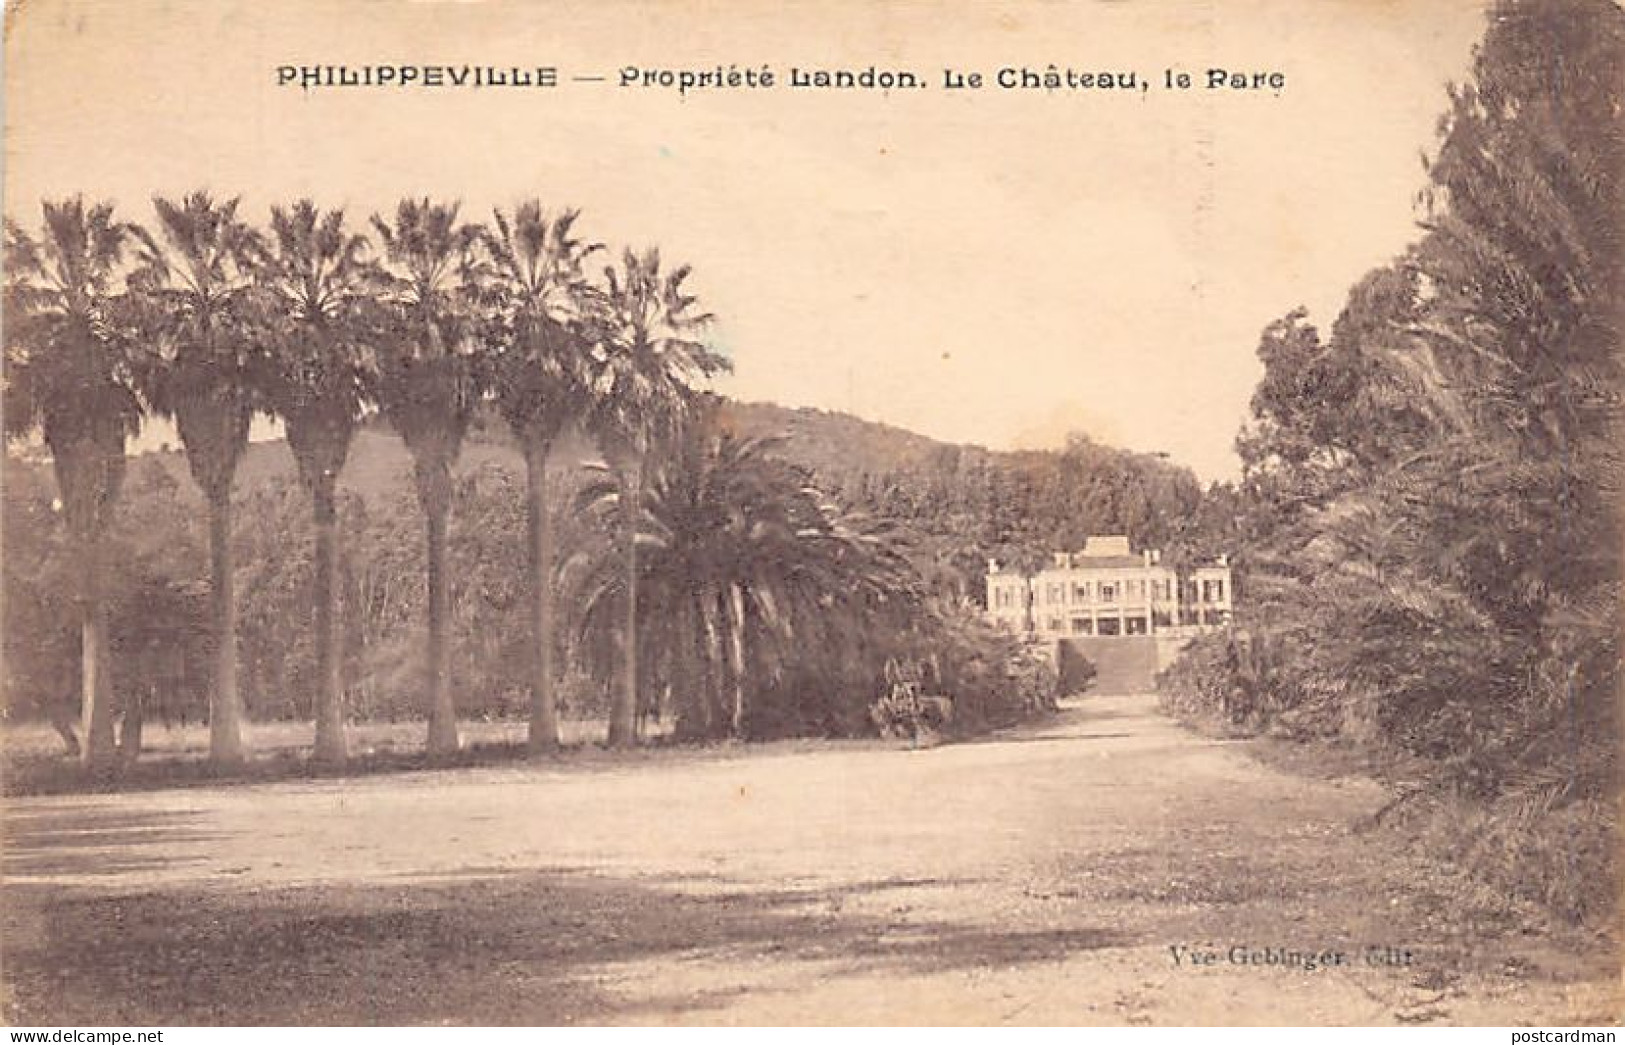 PHILIPPEVILLE Skikda - Propriété Landon, Le Château, Le Parc - Skikda (Philippeville)